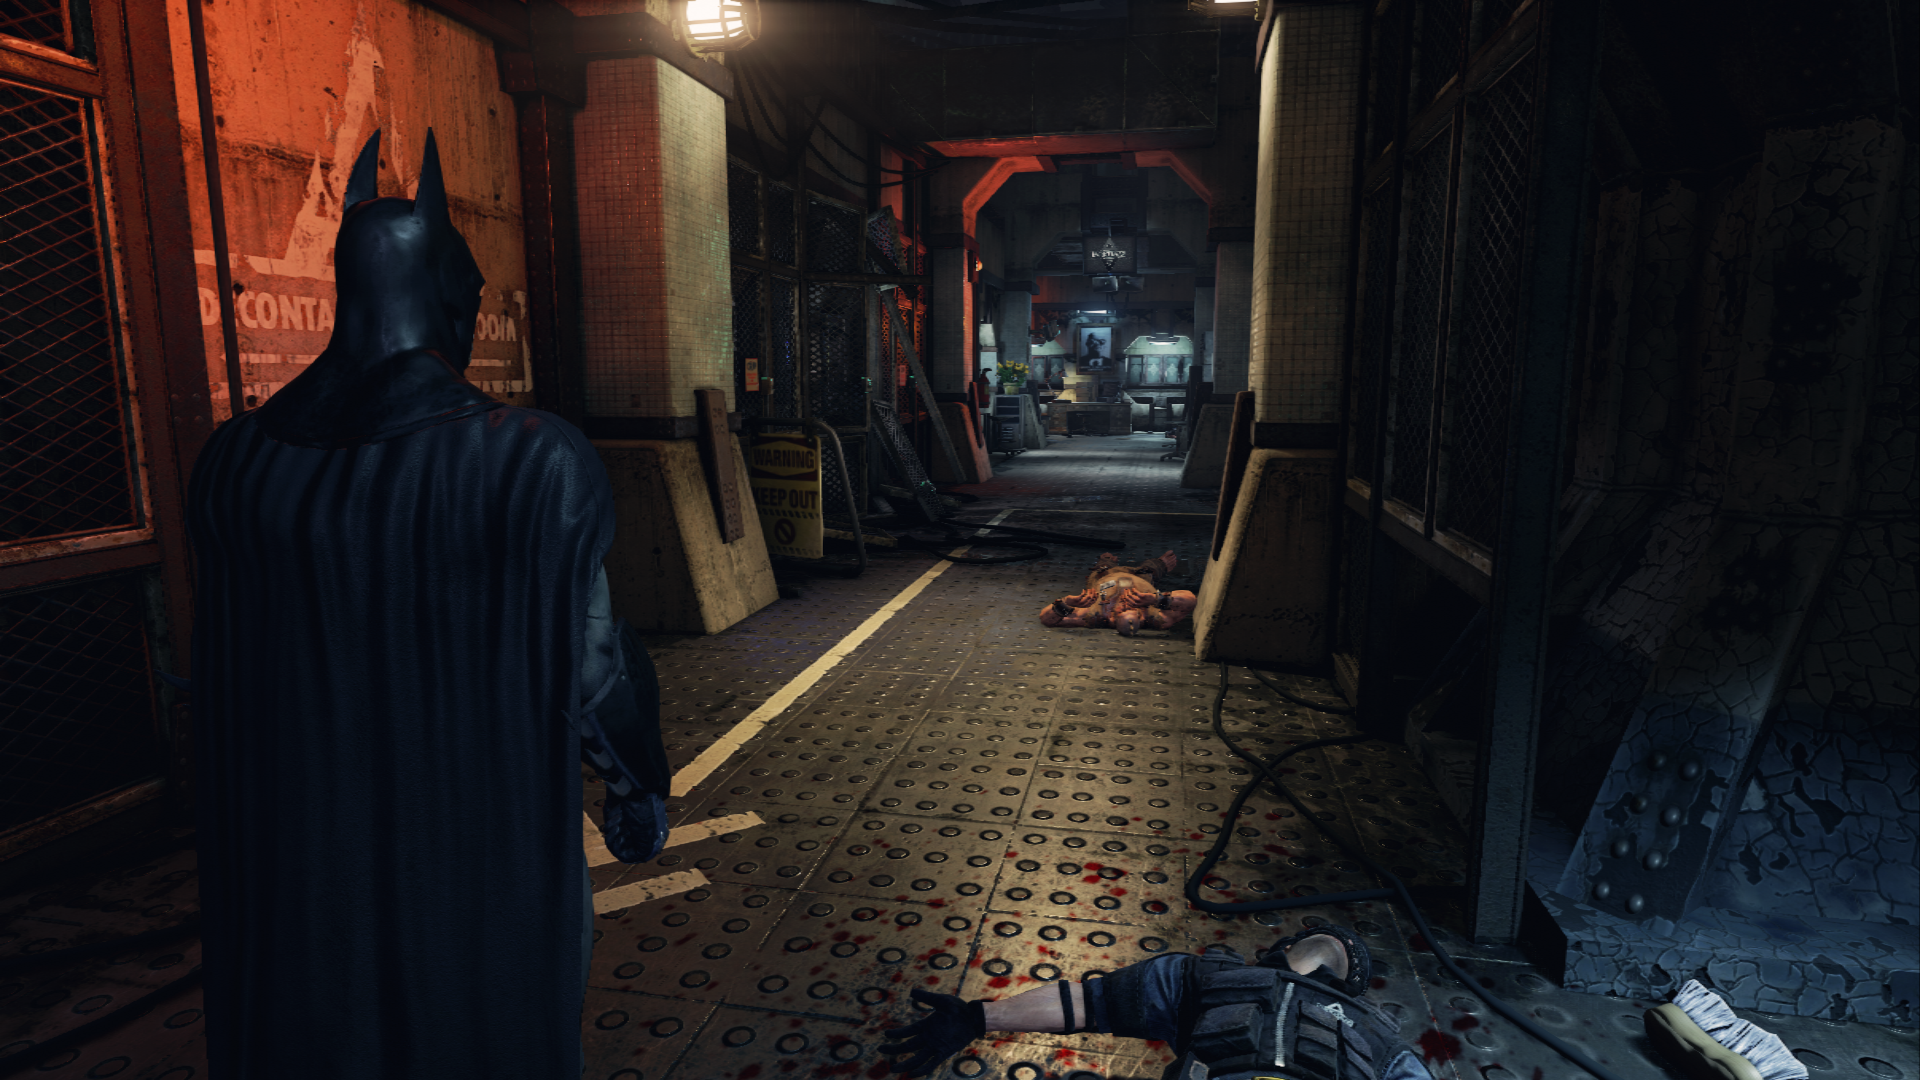 Is Batman: Arkham Asylum 2009's best game? - CNET